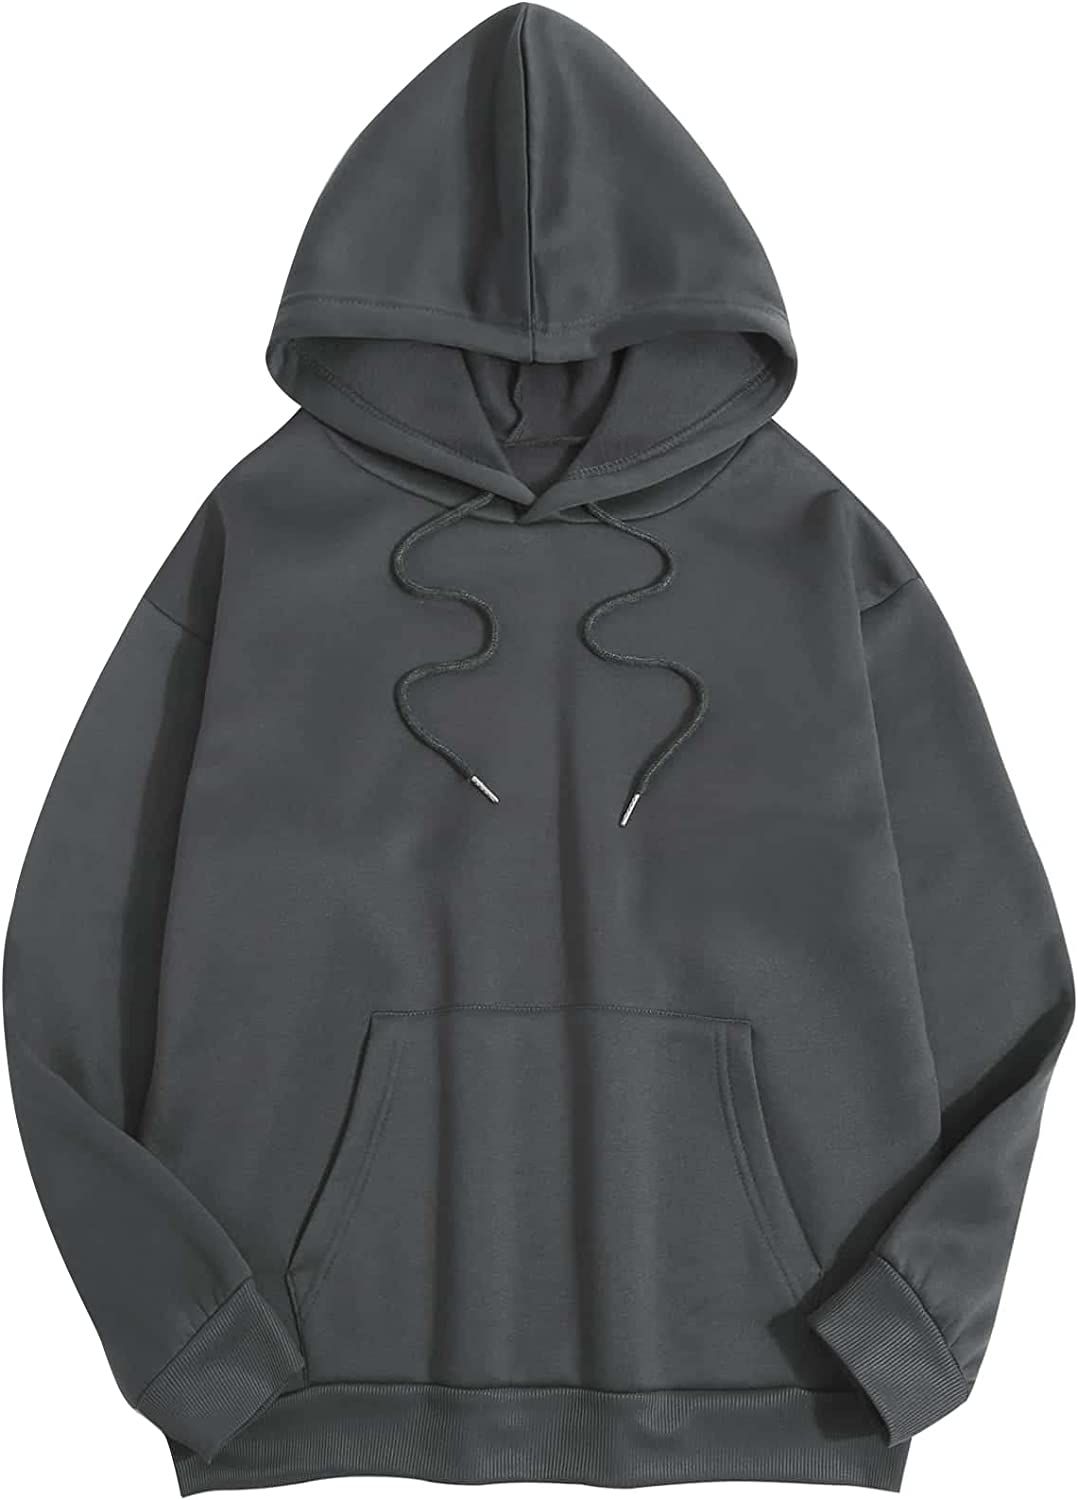 SheIn Women's Casual Long Sleeve Hoodies Thermal Hooded Sweatshirt Tops with Pocket | Amazon (US)